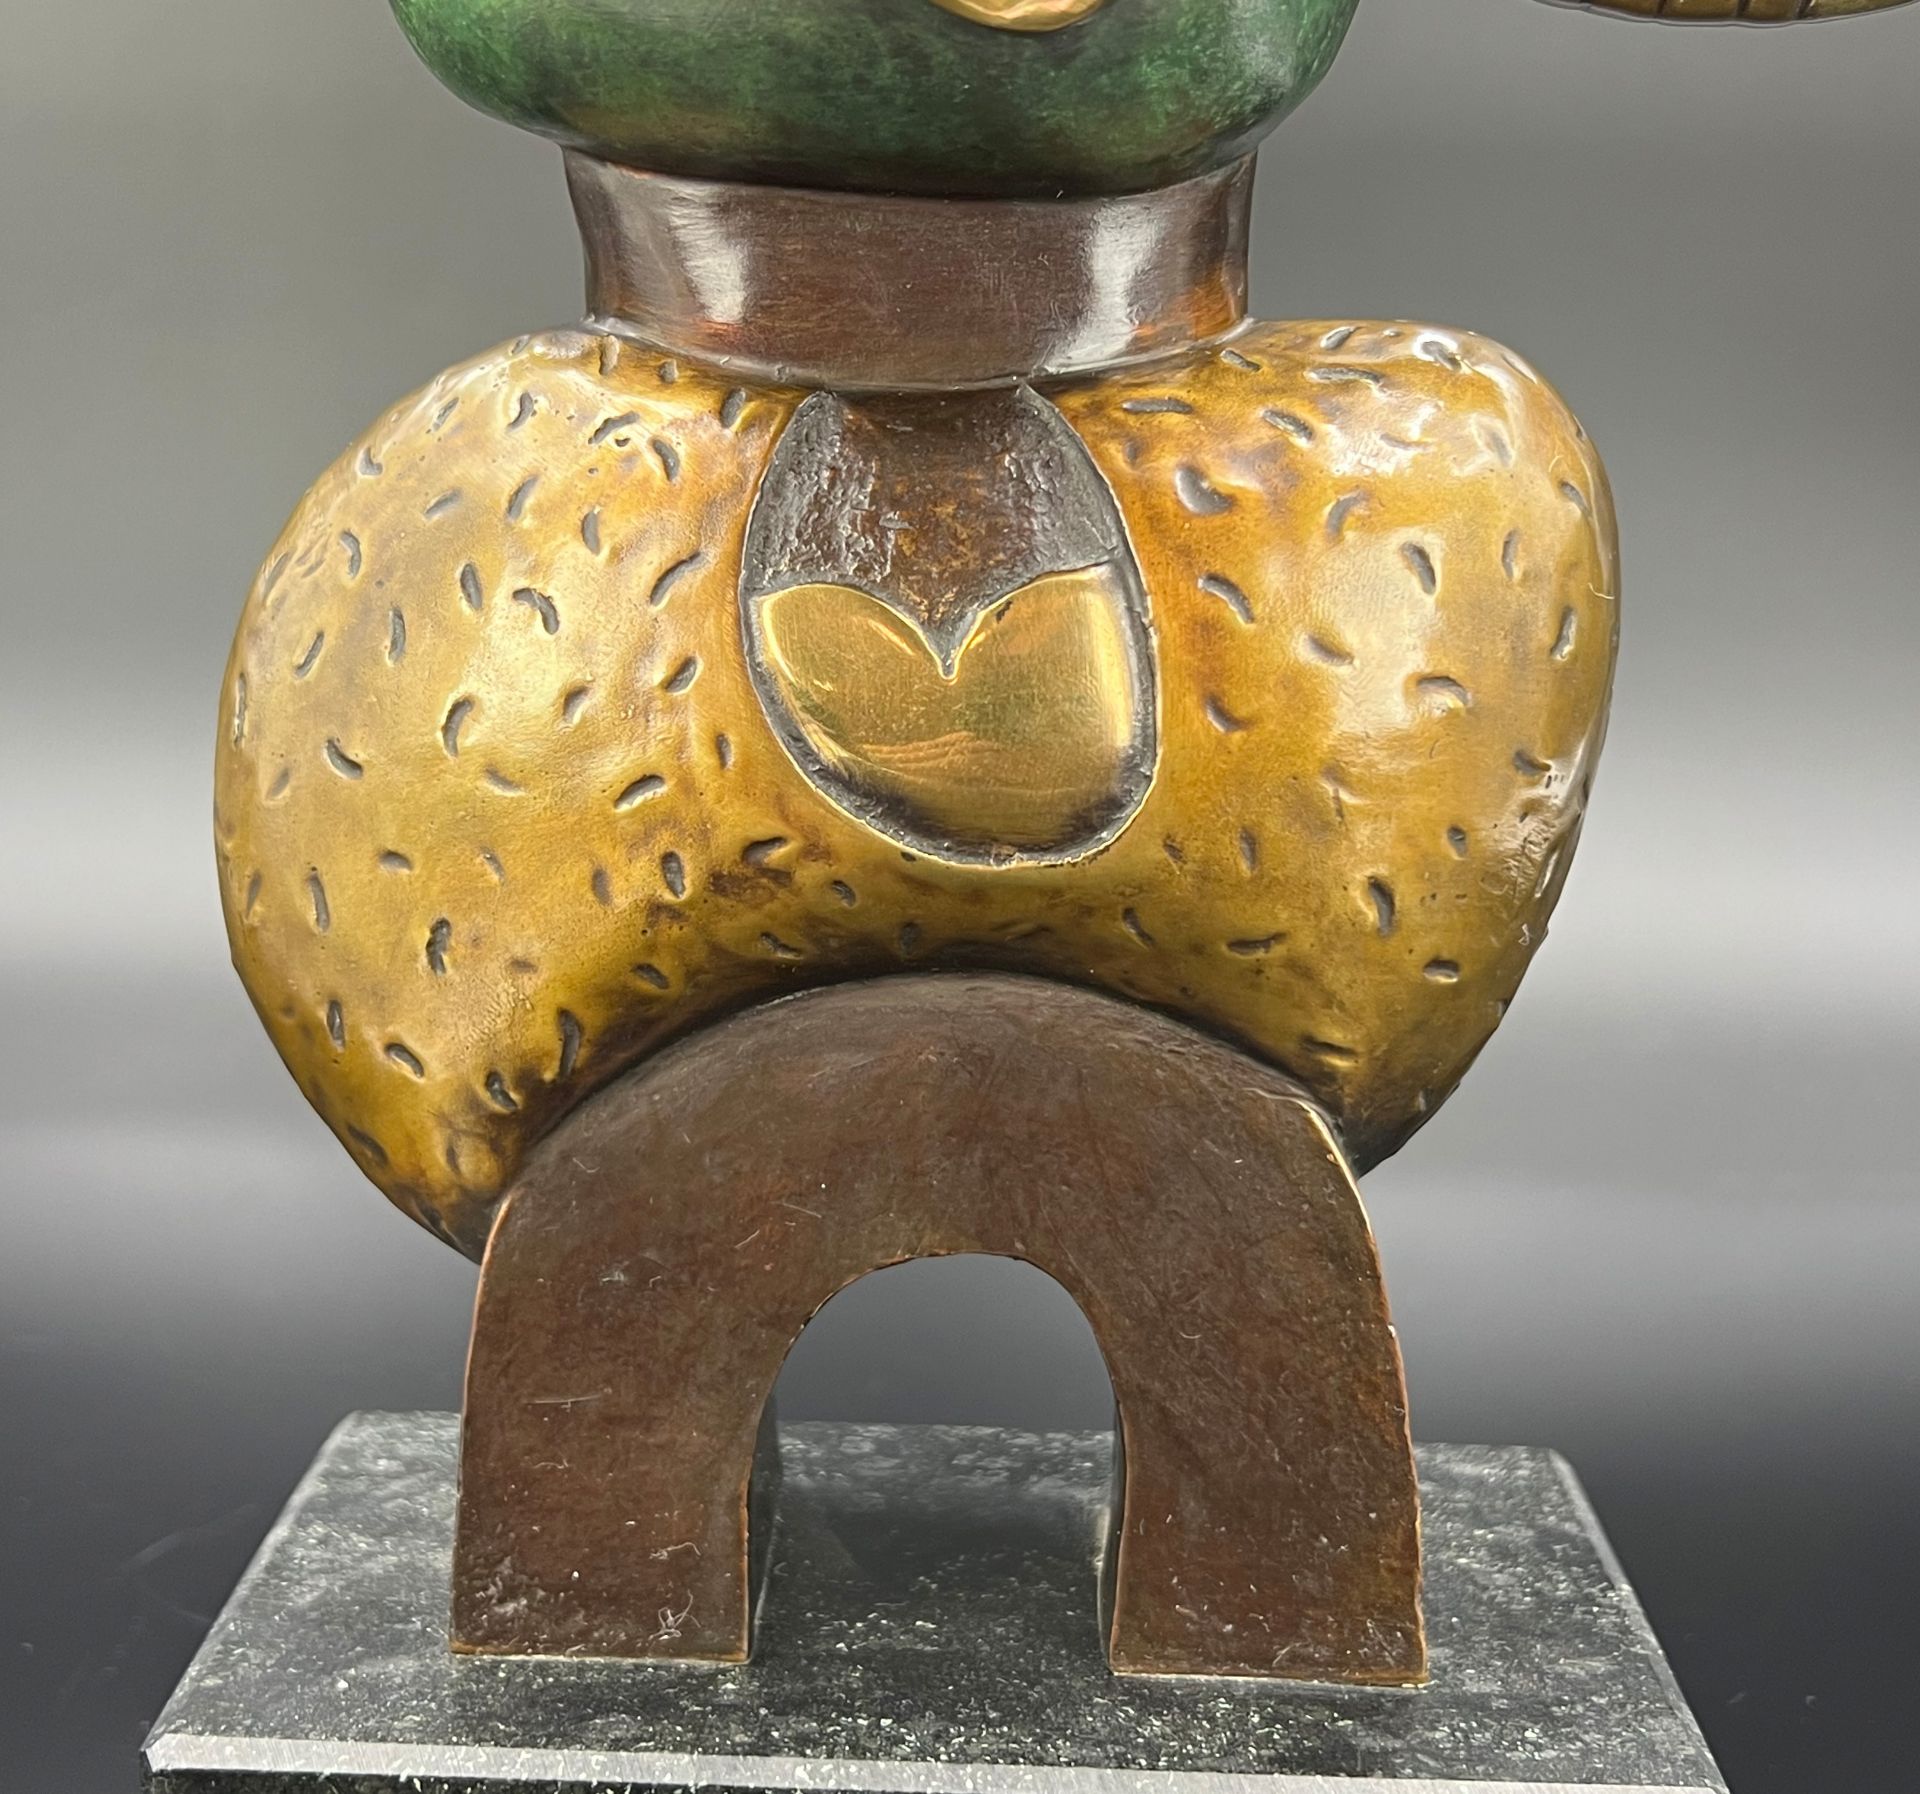 Otmar ALT (1940). Bronze. "King of the bees". 2005. - Image 7 of 8